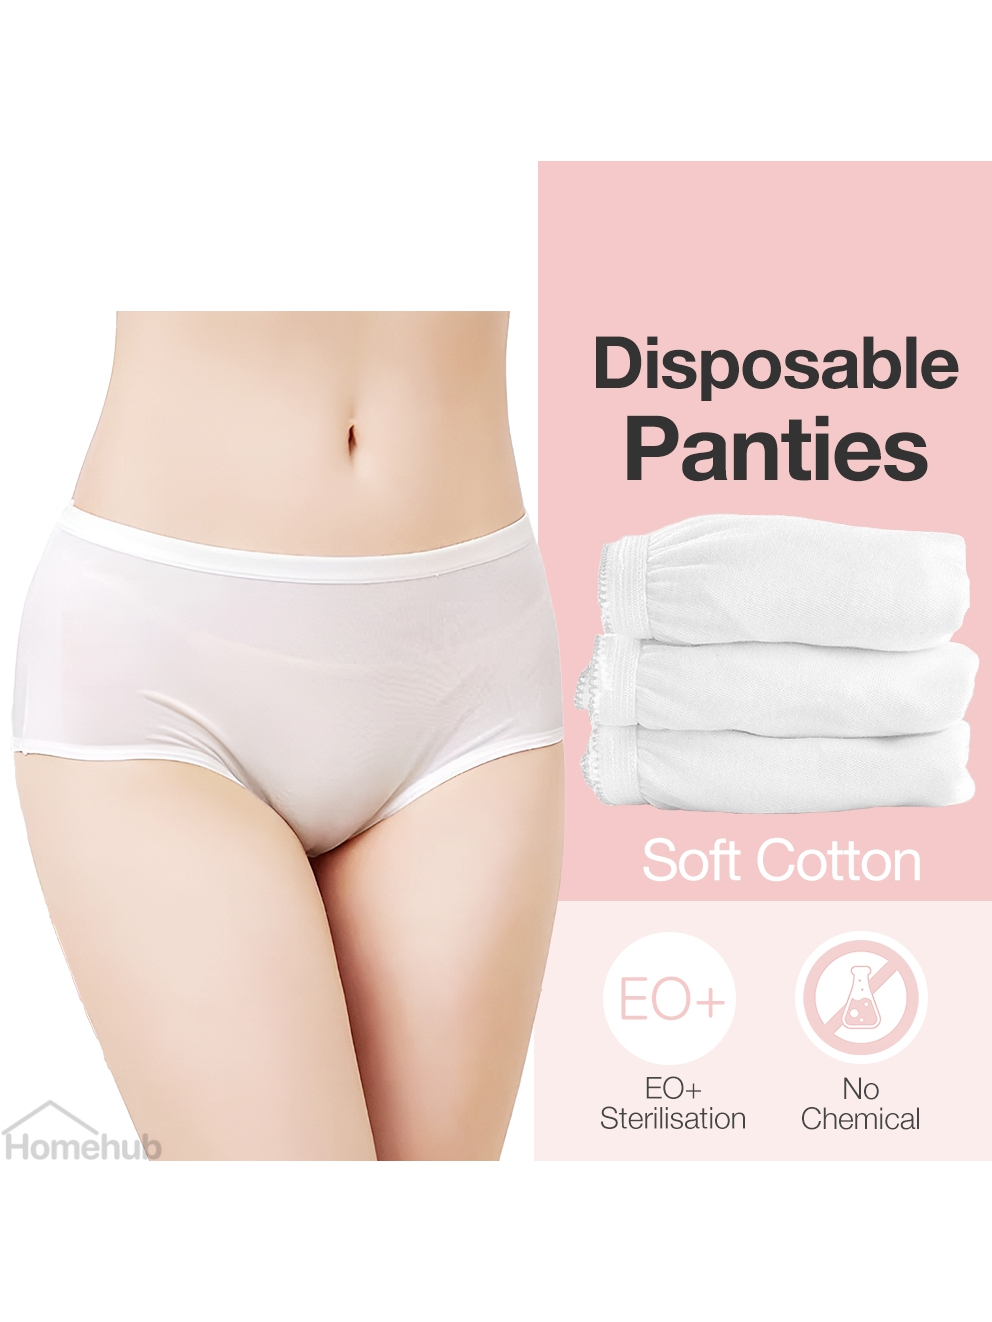 Homehub Disposable Panties Women Ladies Cotton Travel Underwear